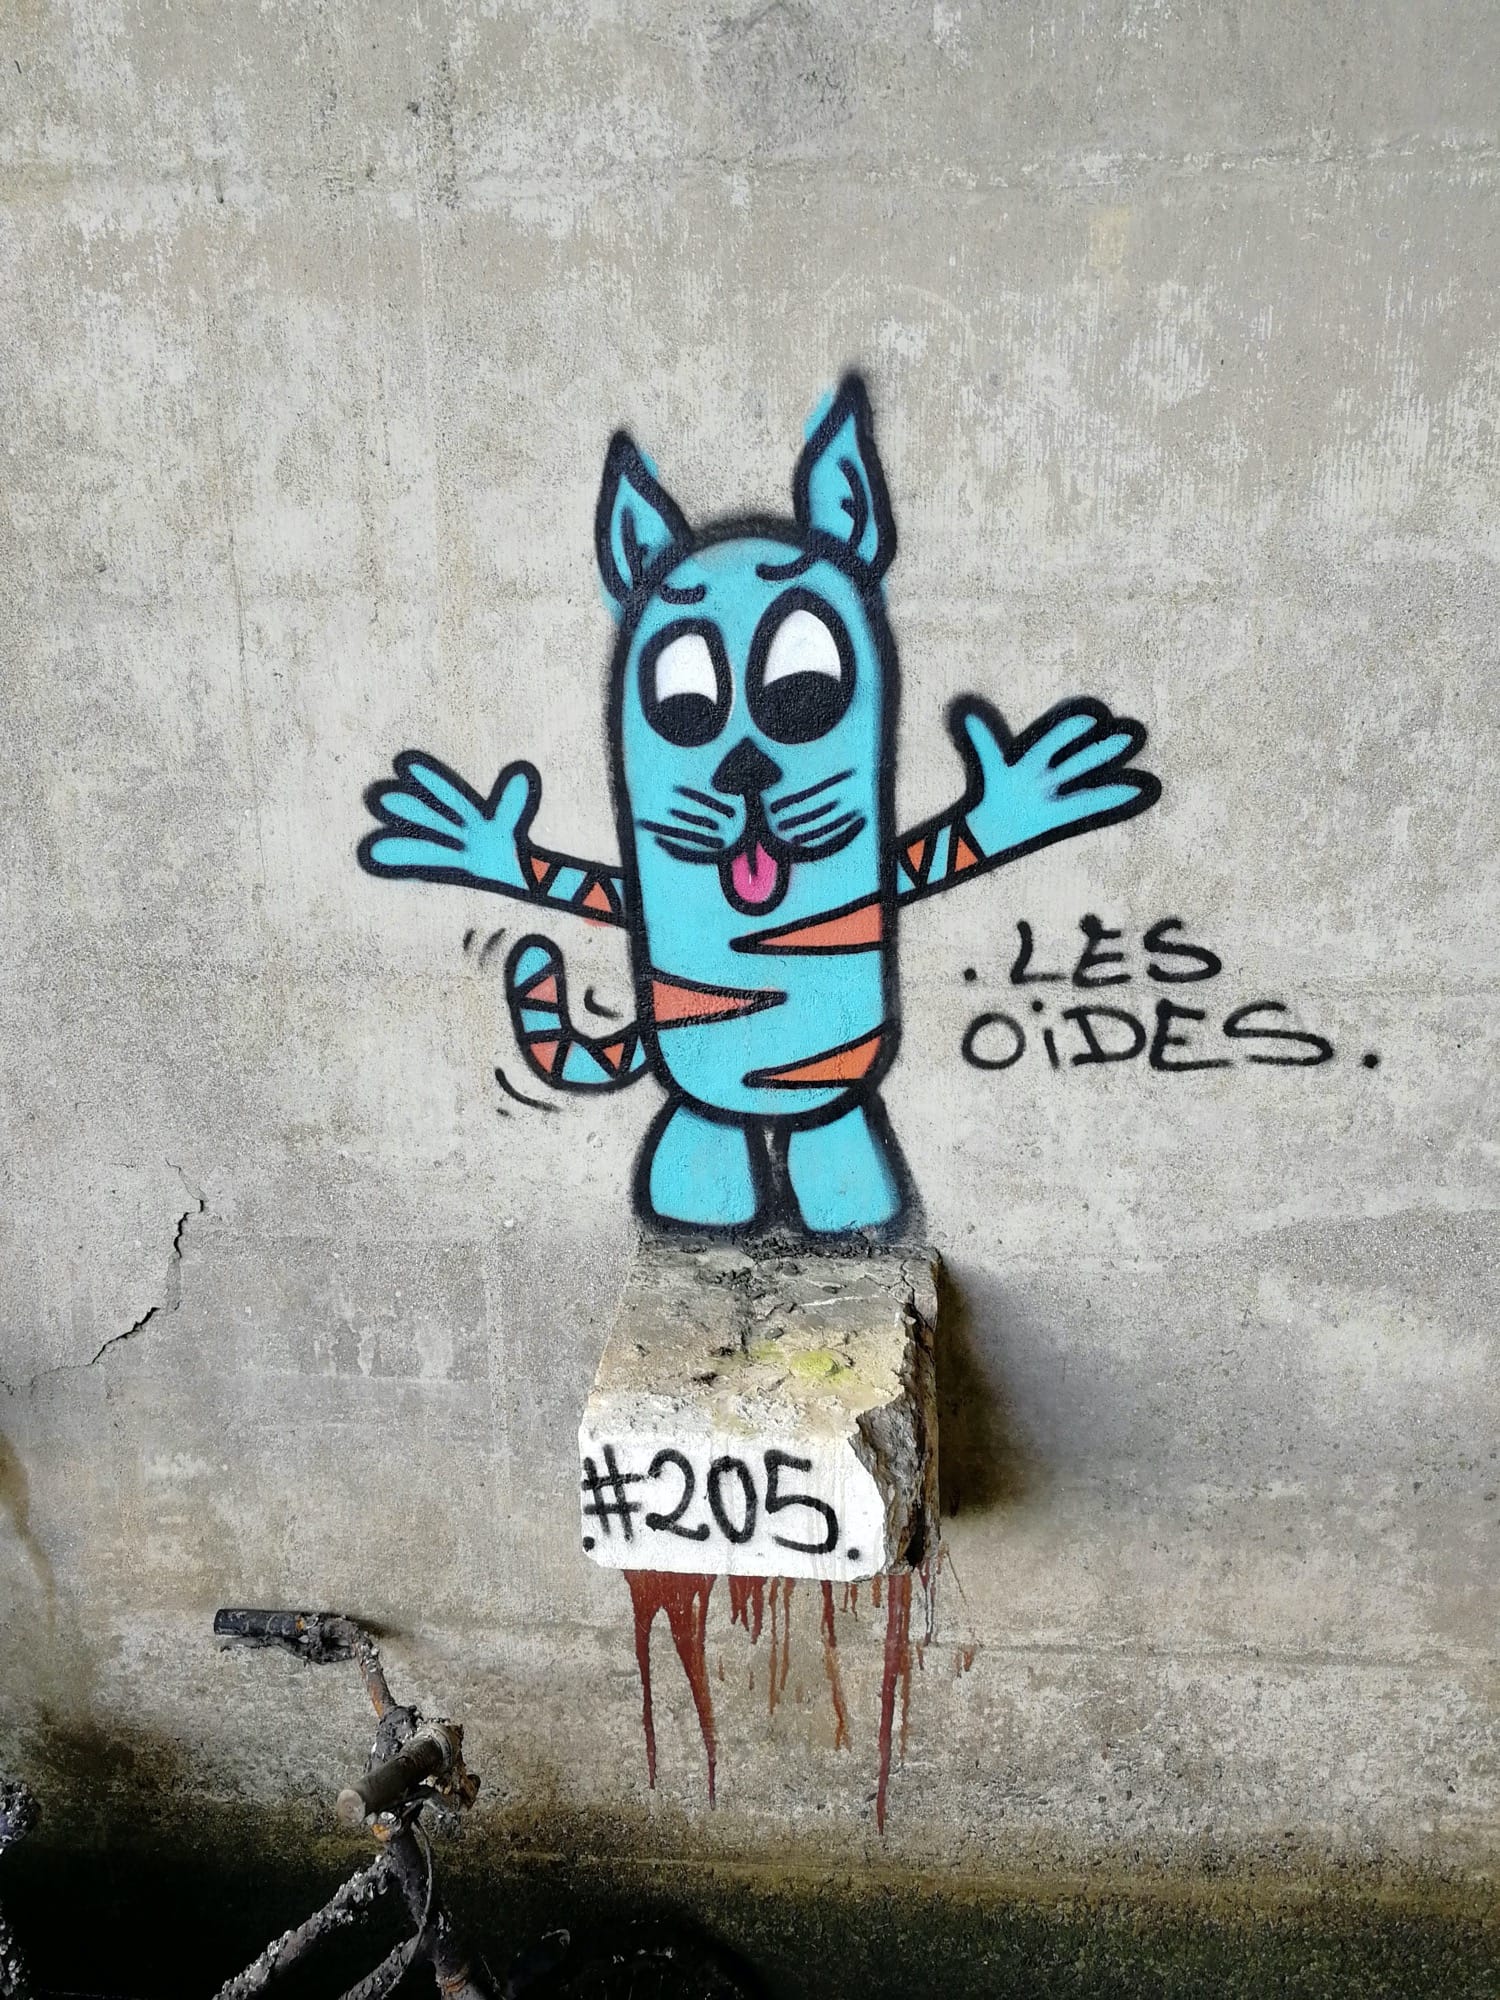 Graffiti 1318 Les oides #205 by the artist Les Oides captured by Rabot in Montoir-de-Bretagne France